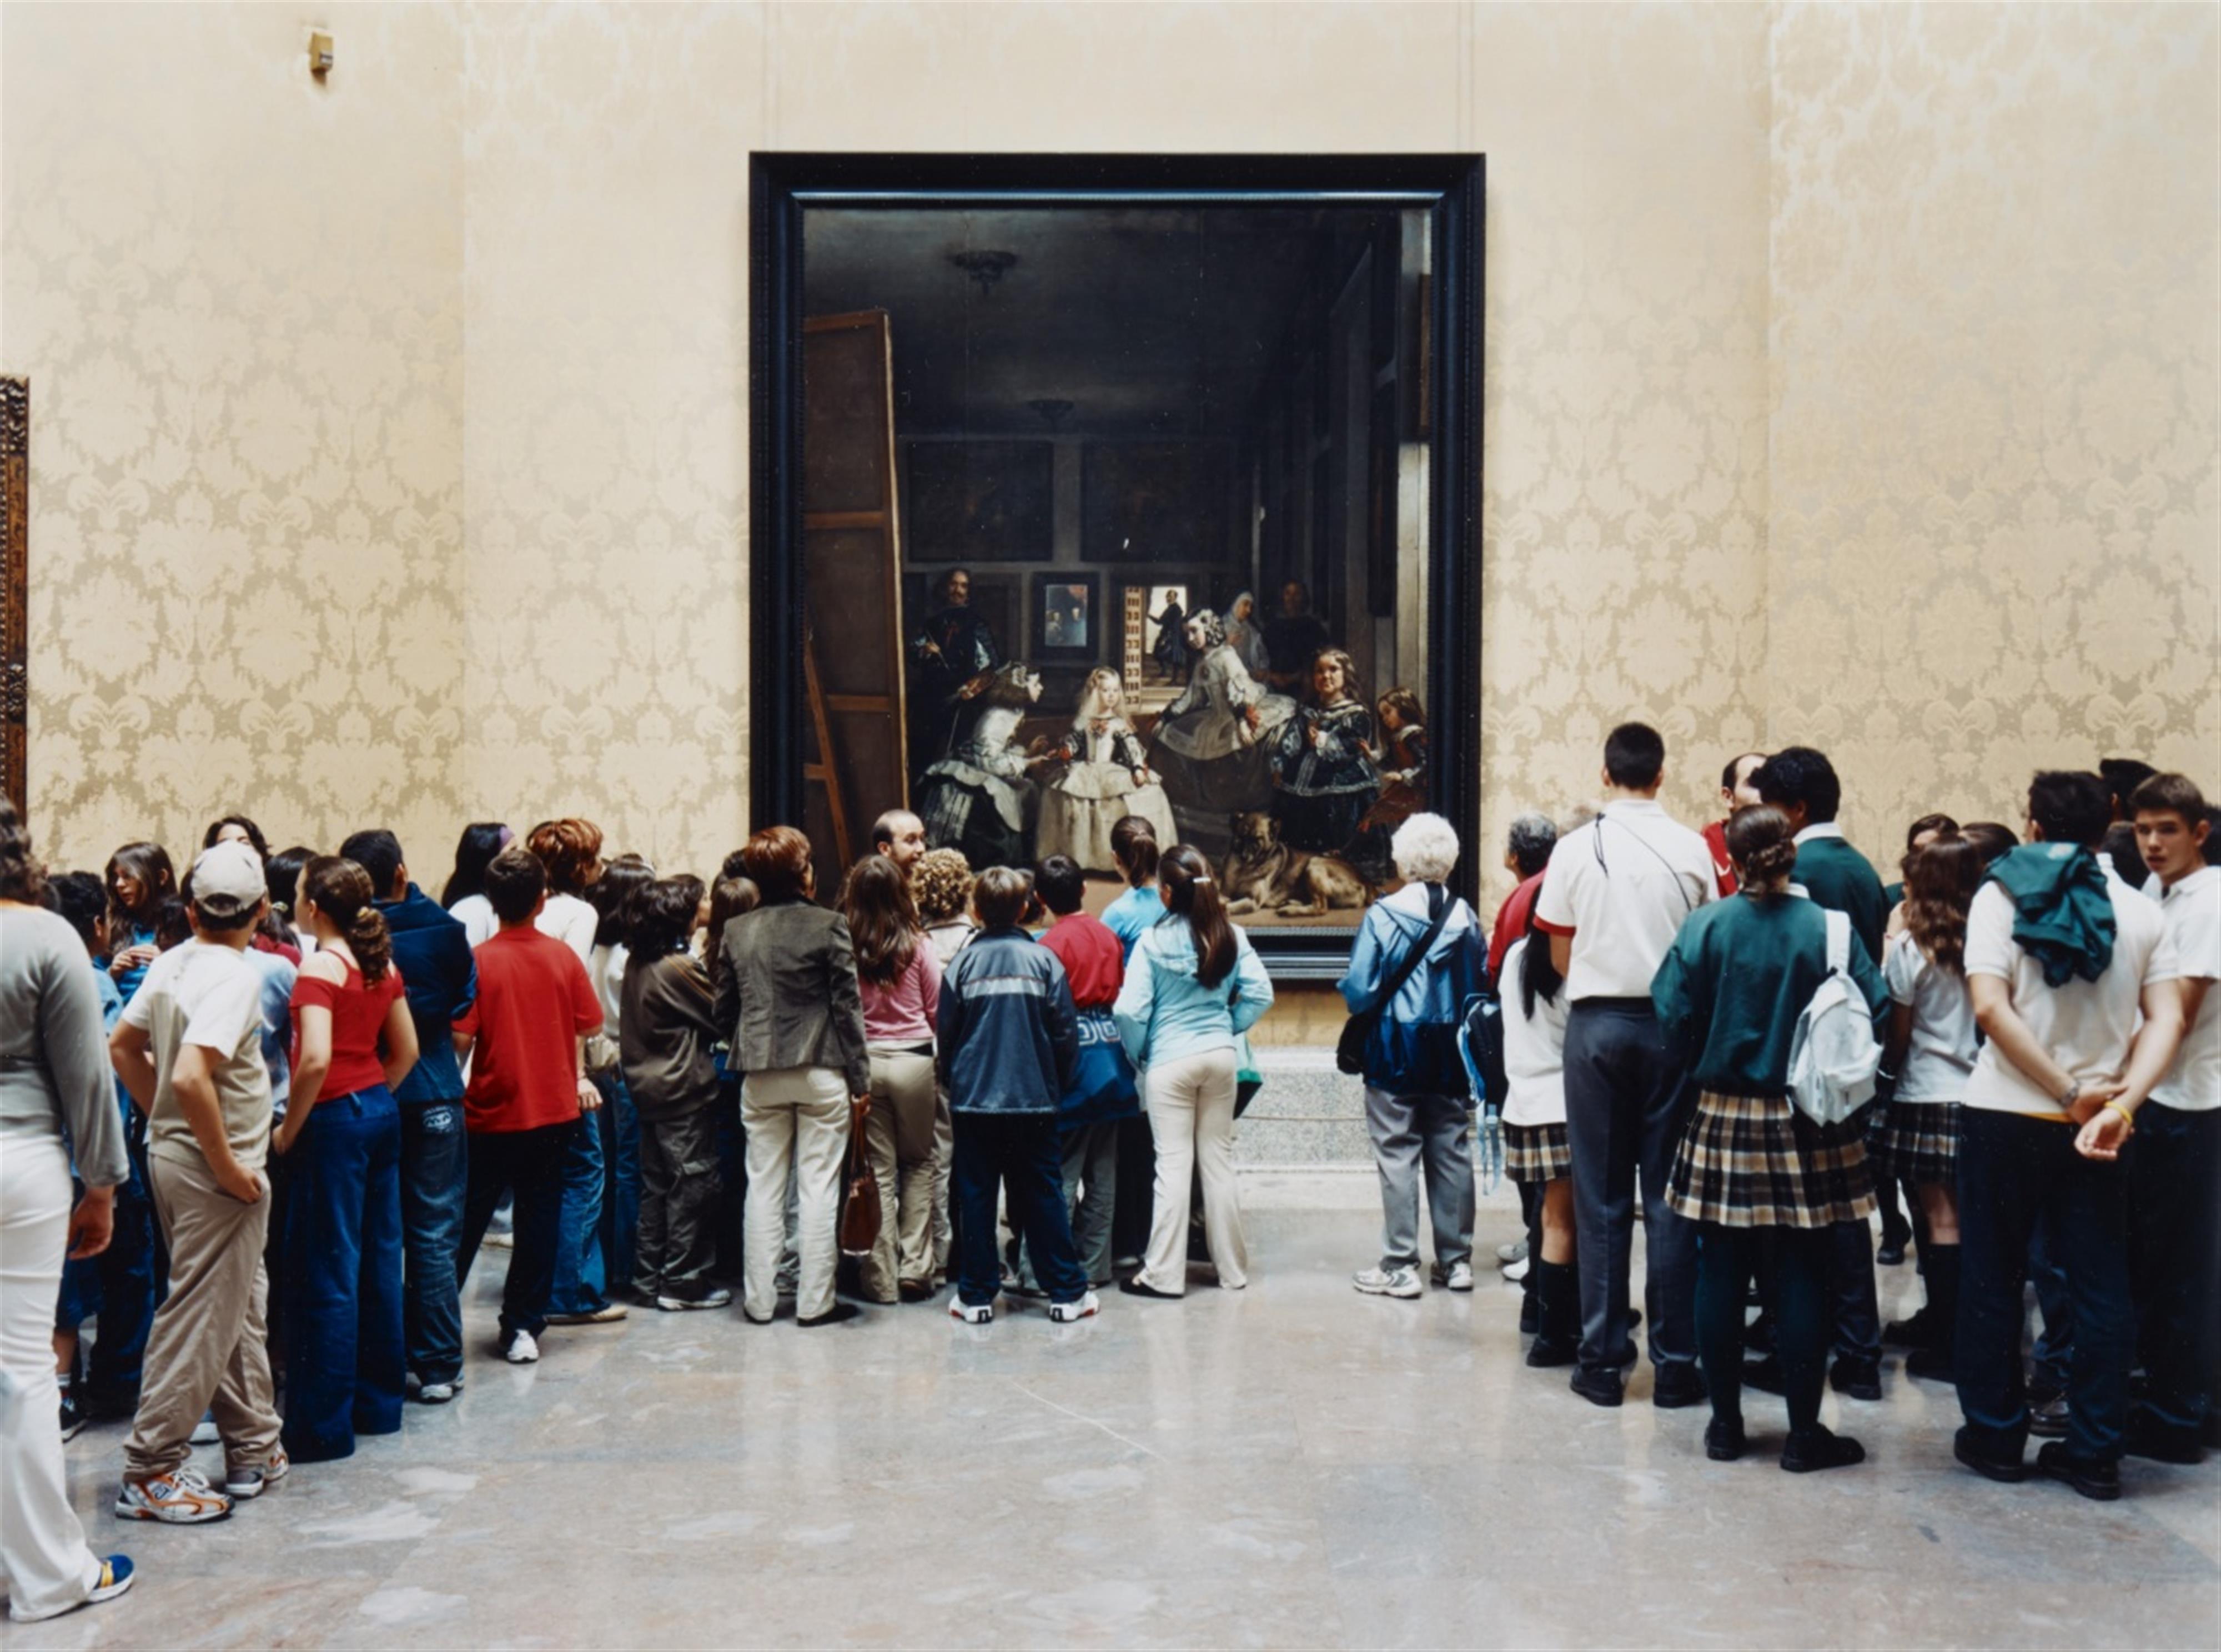 Thomas Struth - Museo del Prado, Room 12, Madrid - image-1